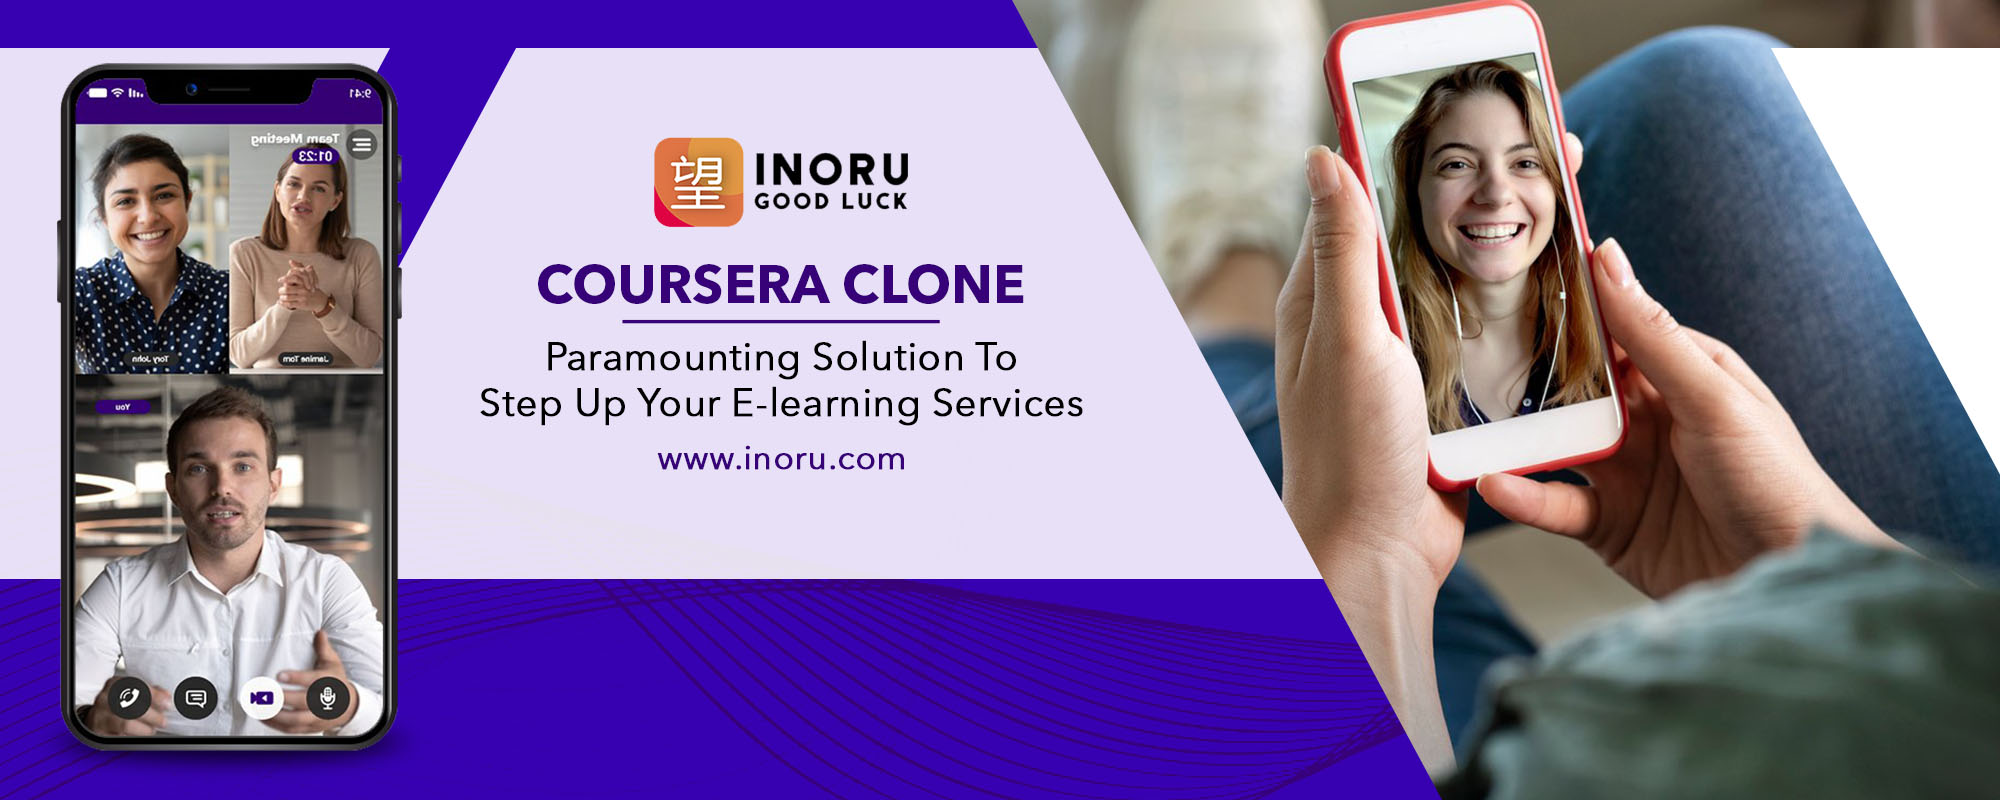 Coursera Clone